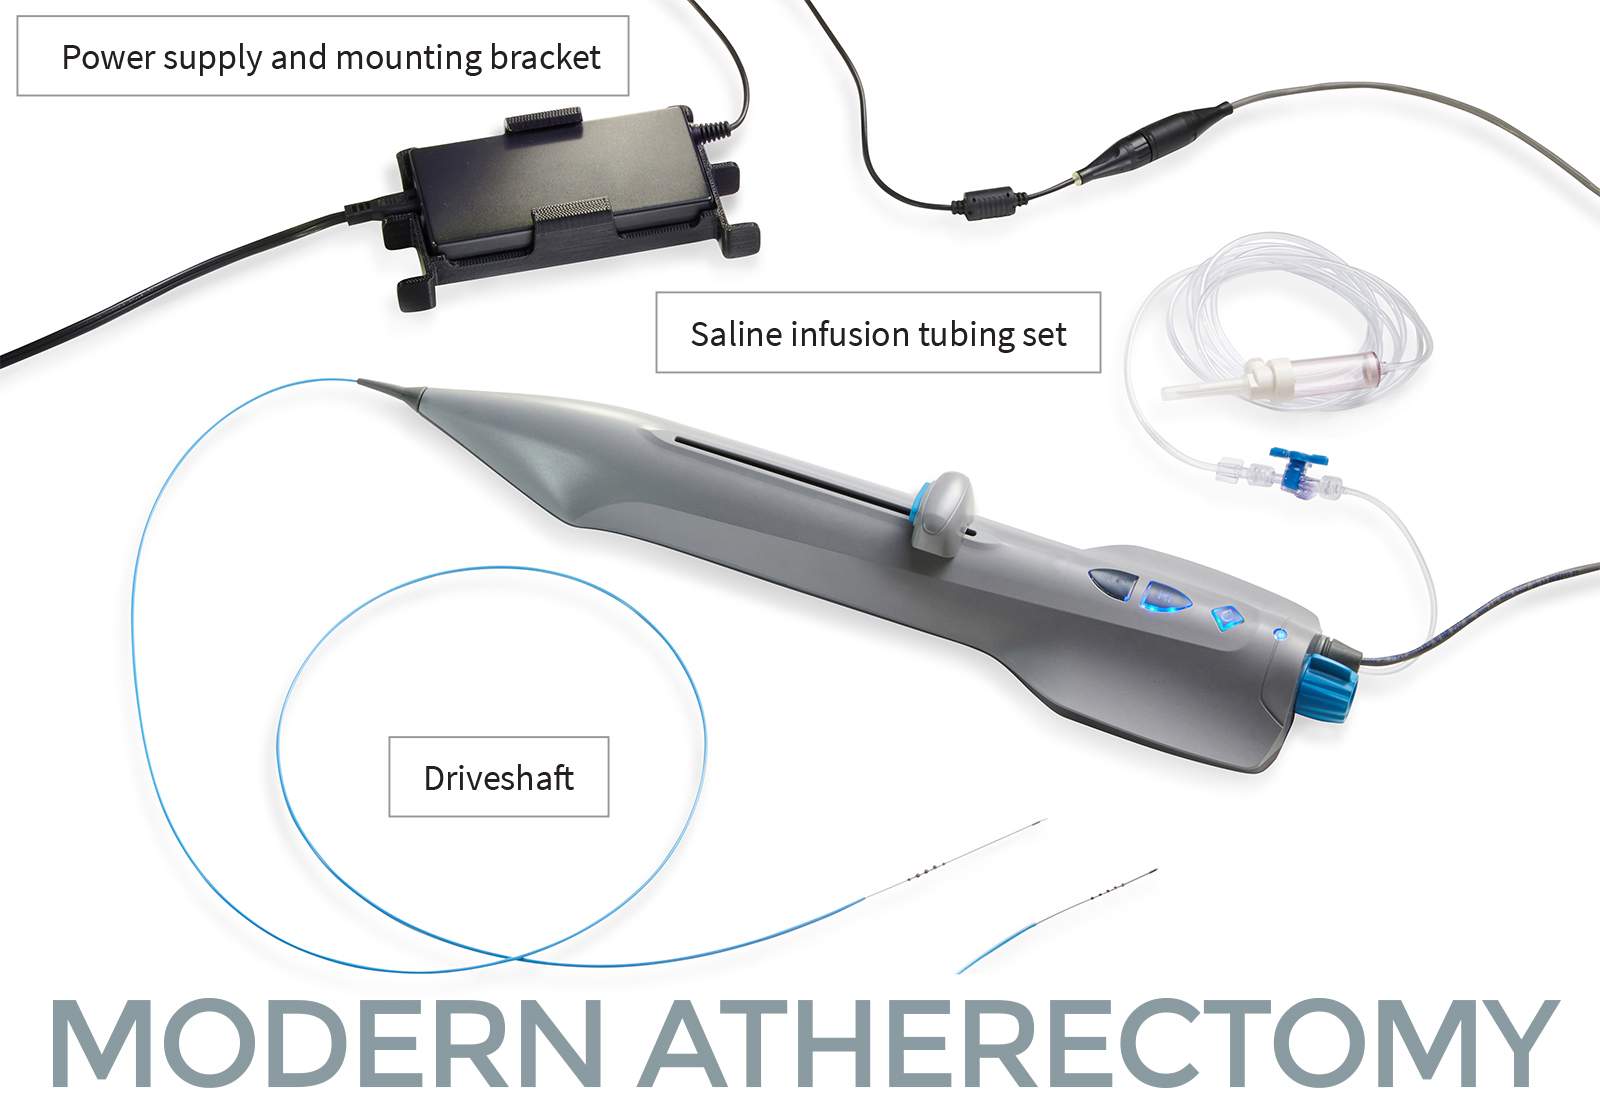 FreedomFlow catheter, driveshaft, tubing set and power supply